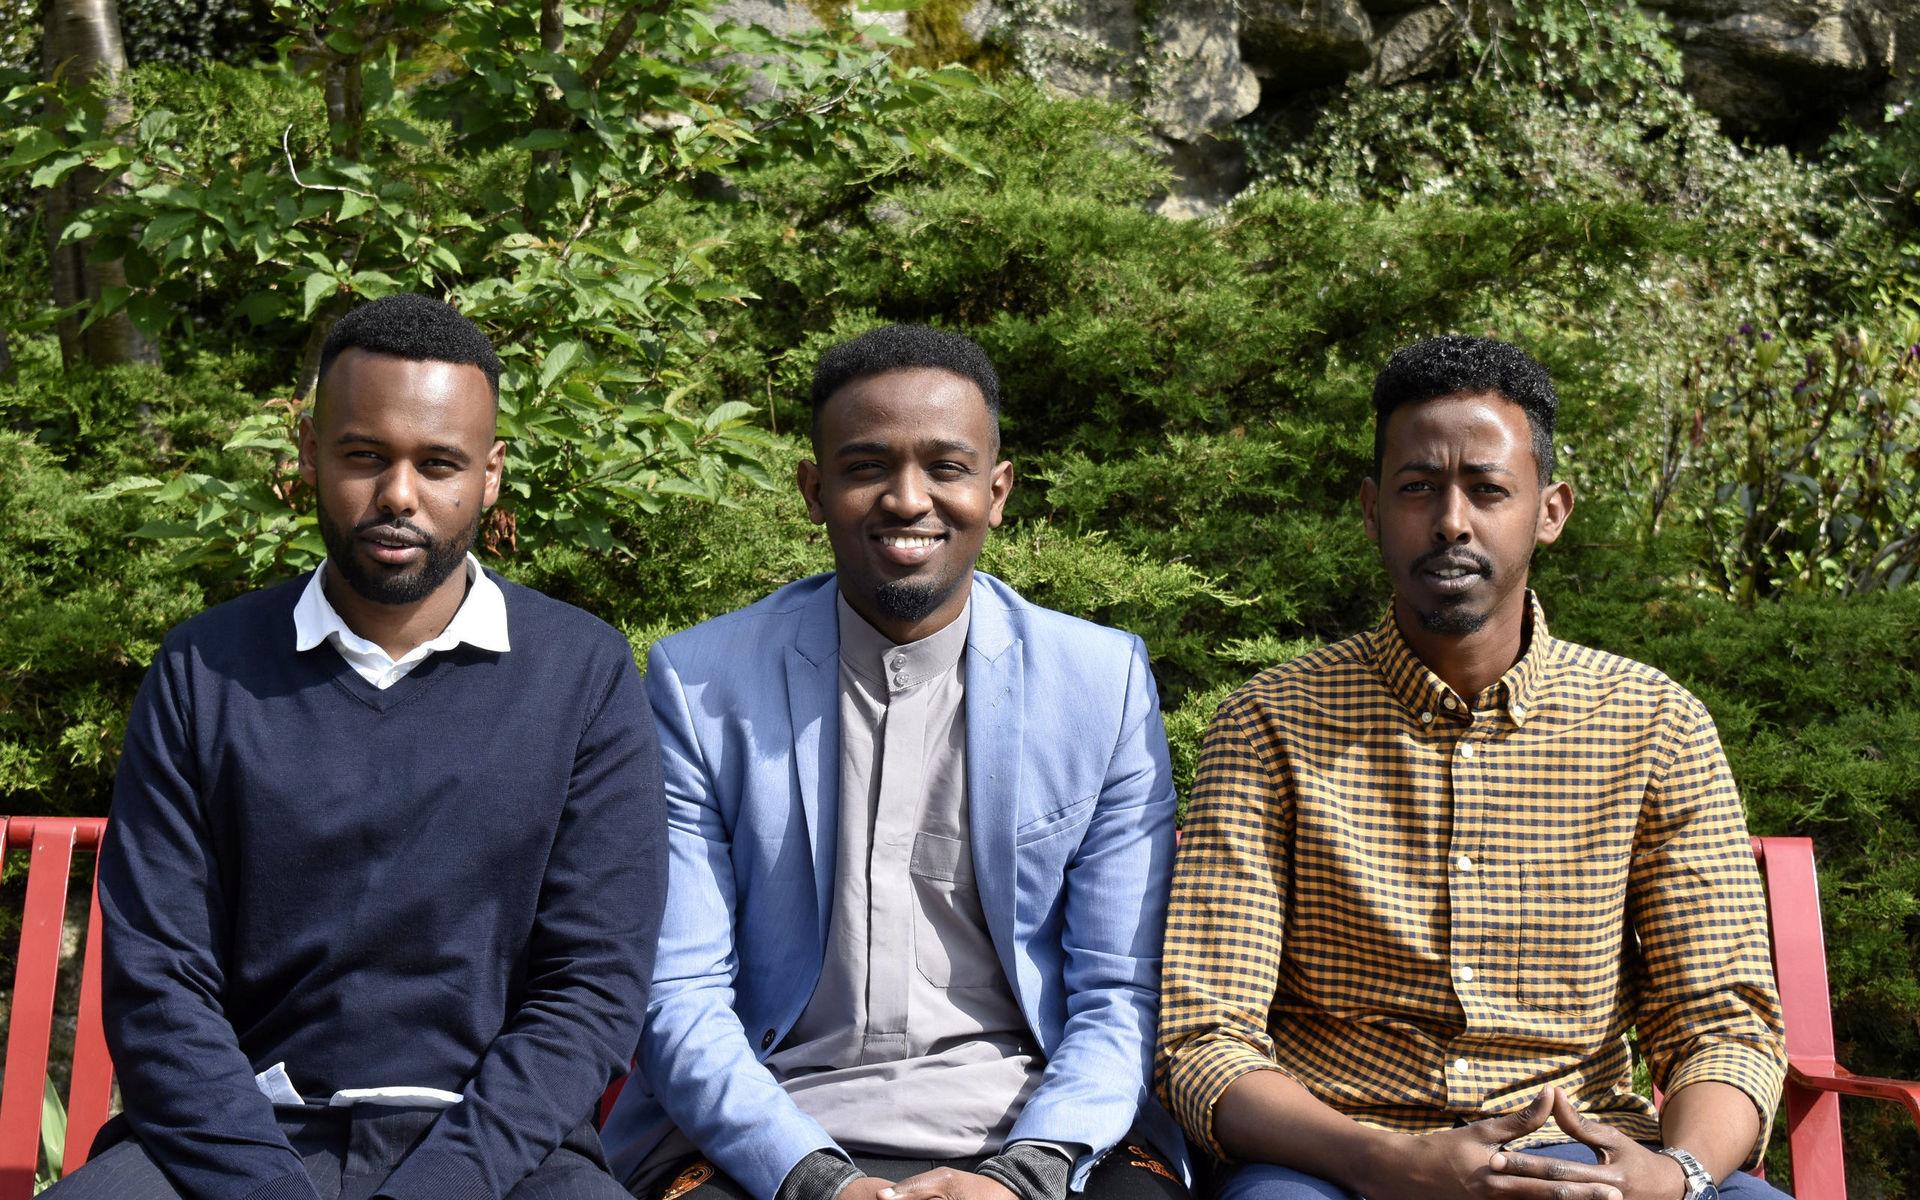 Bashash Mohamed, Abdi Hasan, och Abdulahi Mohamat firar Eid tillsammans i Dalaberg centrum. 